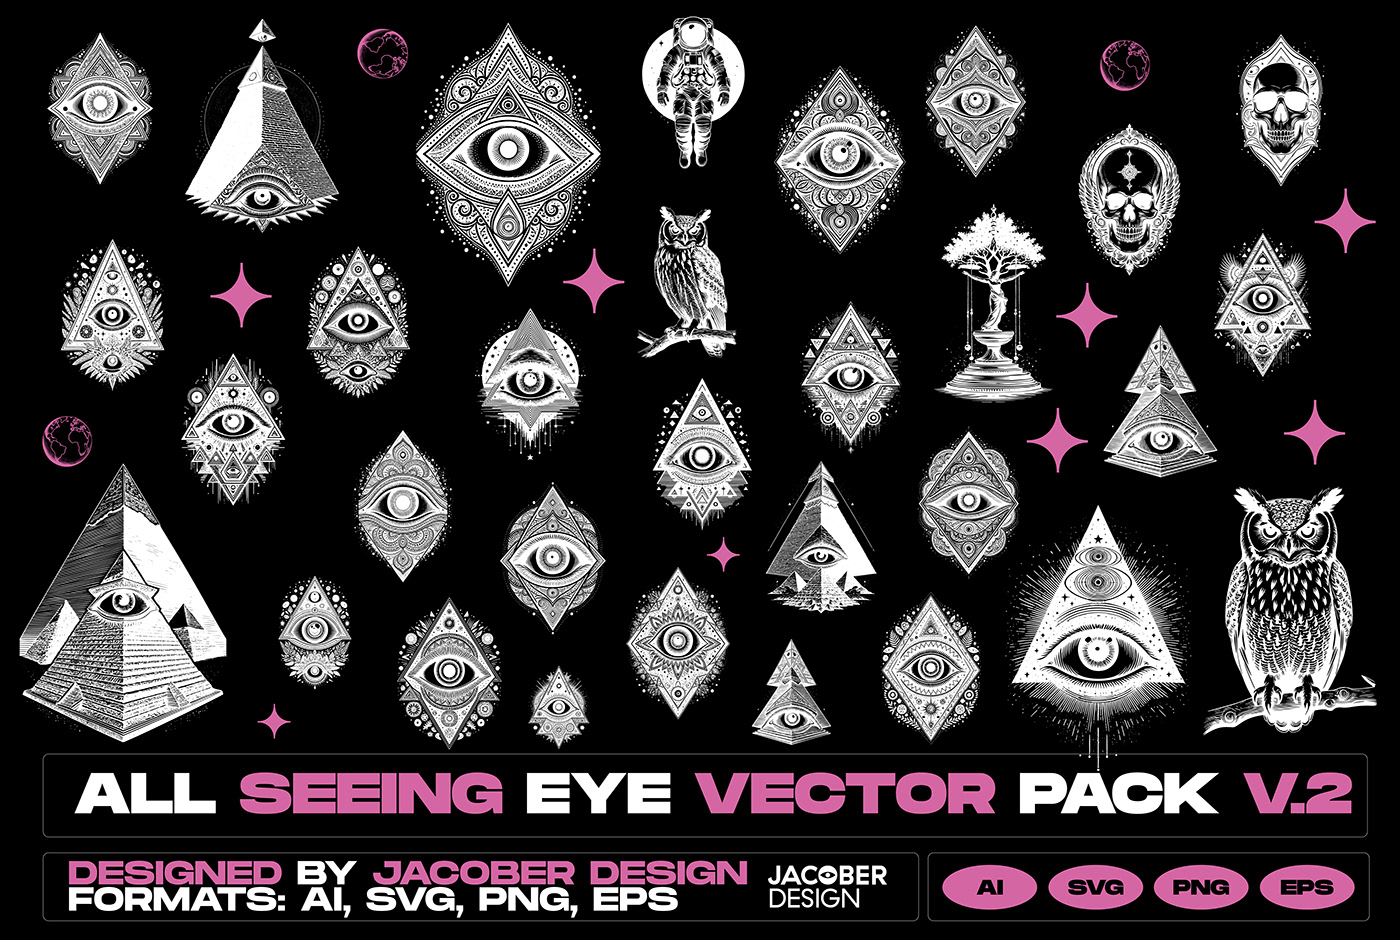 sacred geometry freemasonry occult art illuminati Ancient Symbols Esoteric Graphics Mystic Symbolism Mystic Vision mystical designs Symbolic Illustrations